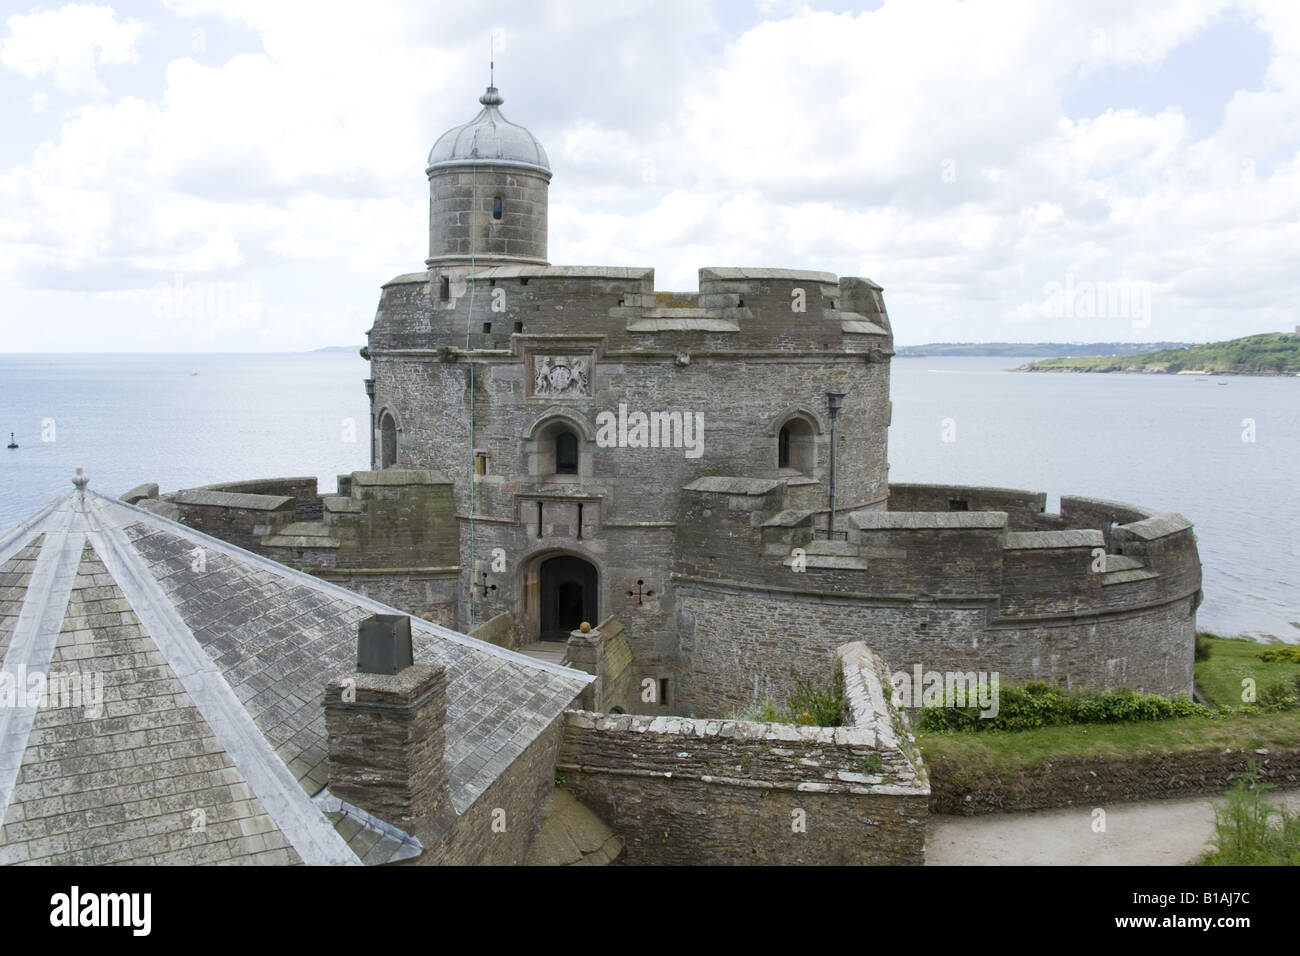 St Mawes tudor castle, Cornwall, England. Stock Photo